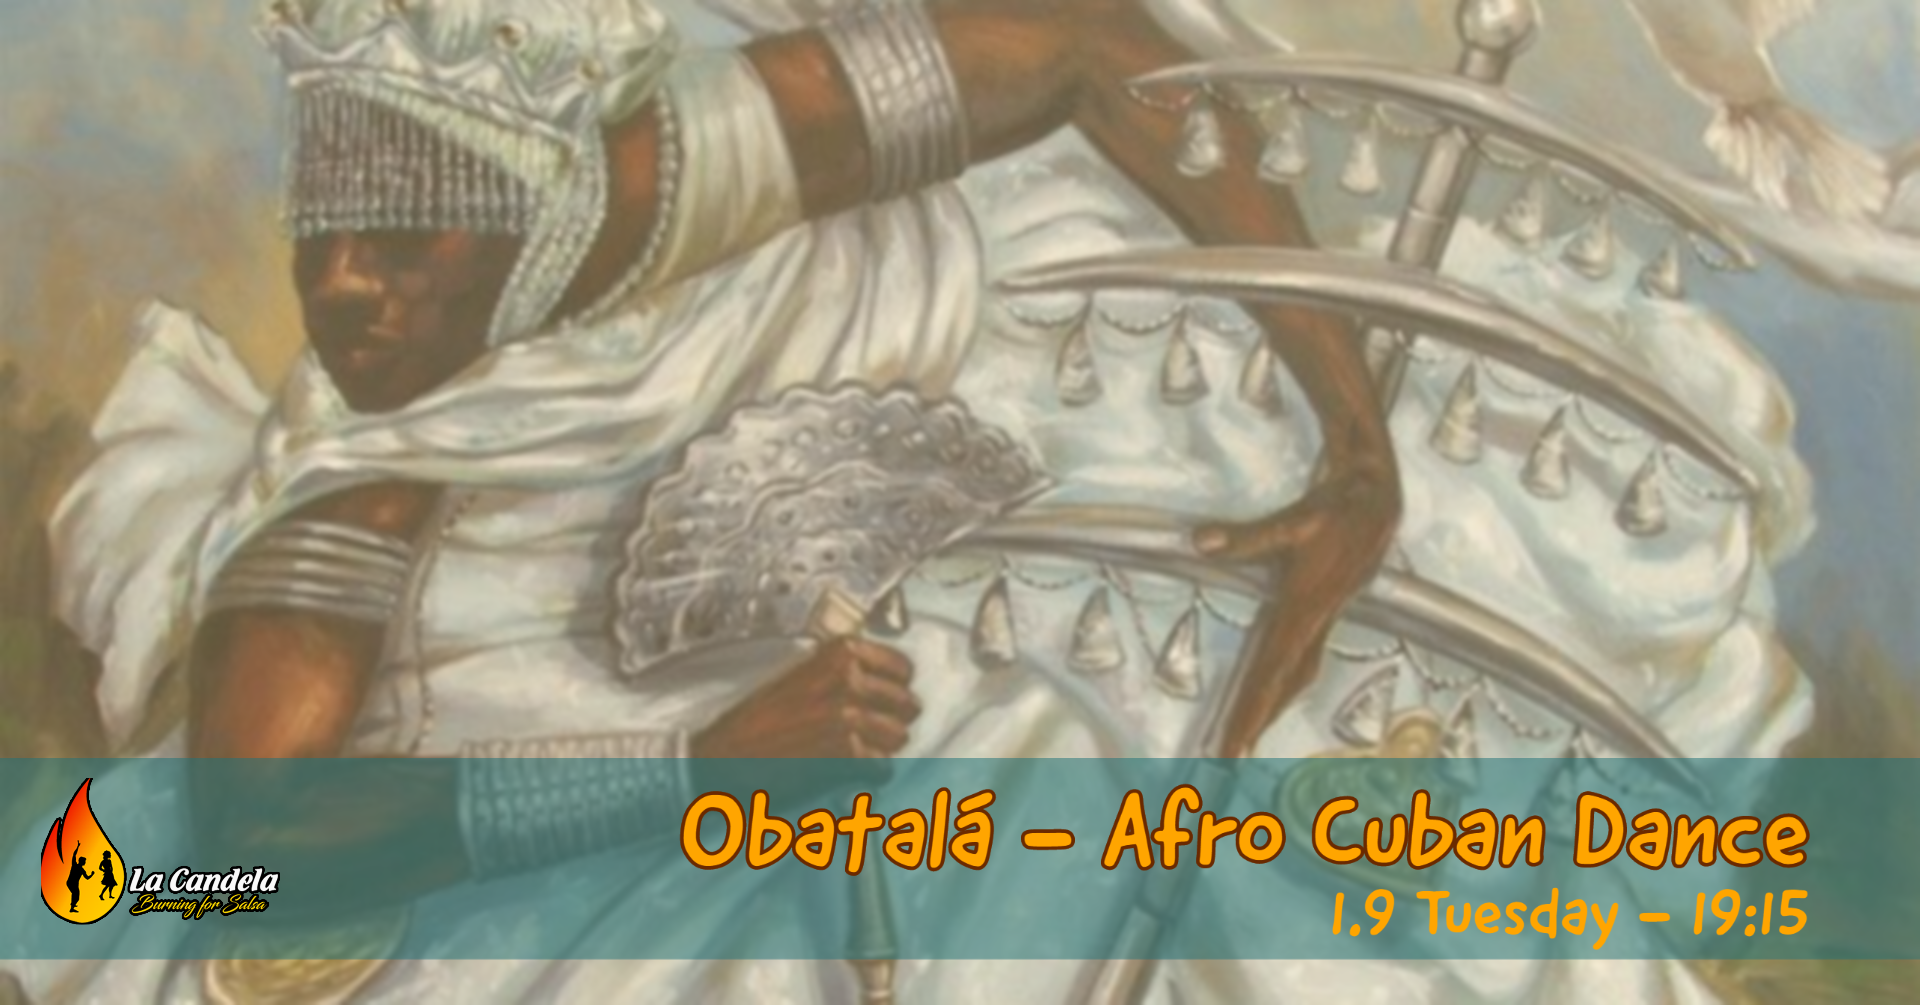 cascarilla #pureza #cantos #obbatala #santeria #yoruba #afrocubana #b